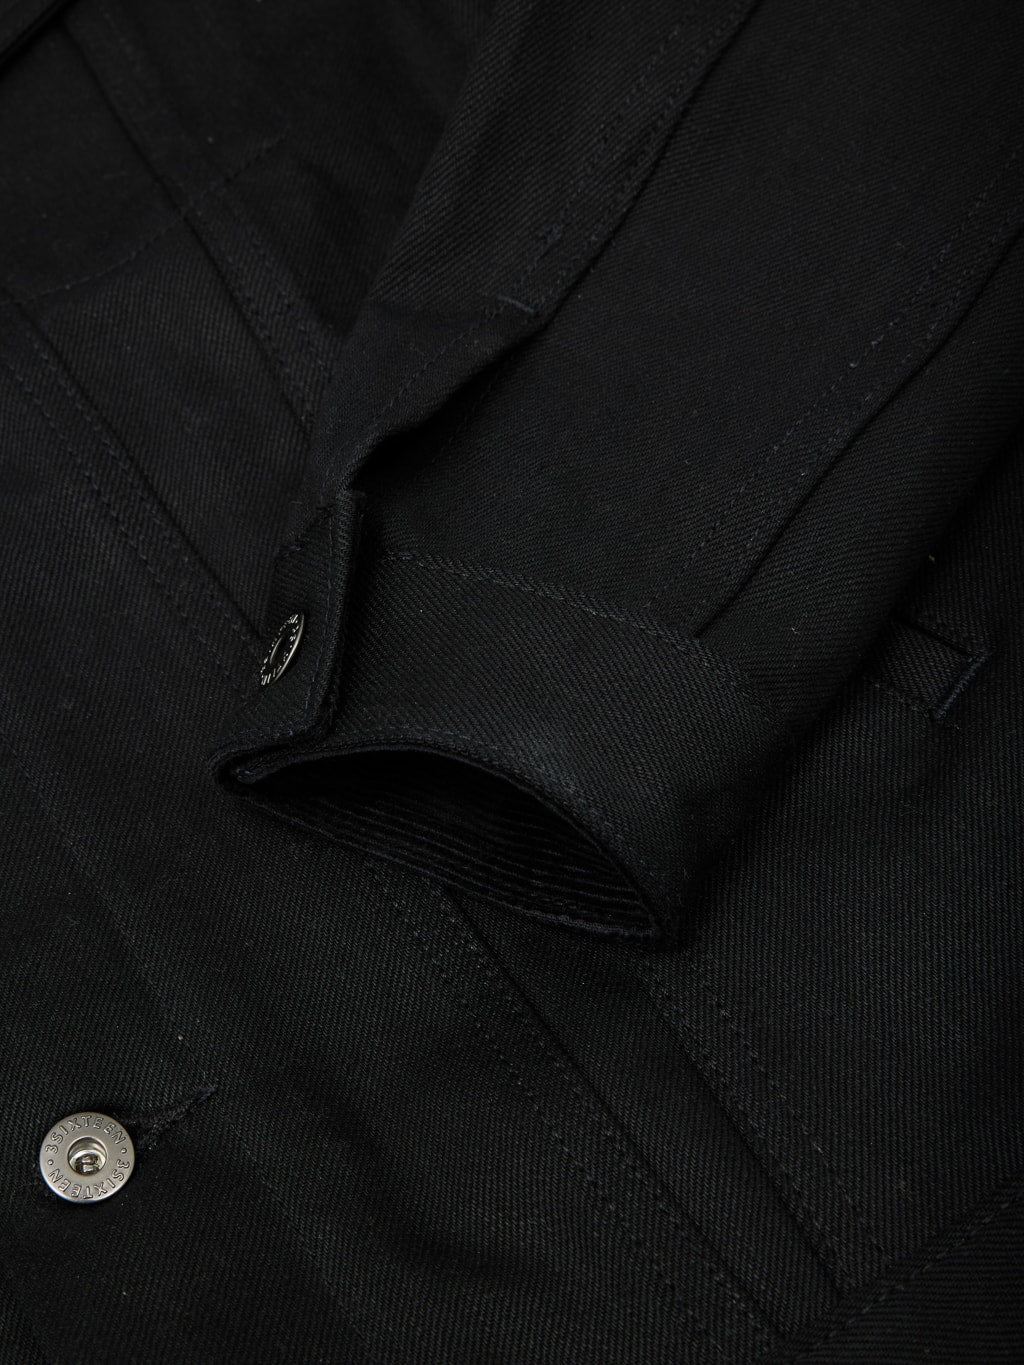 3sixteen type III denim jacket double black selvedge cuff button